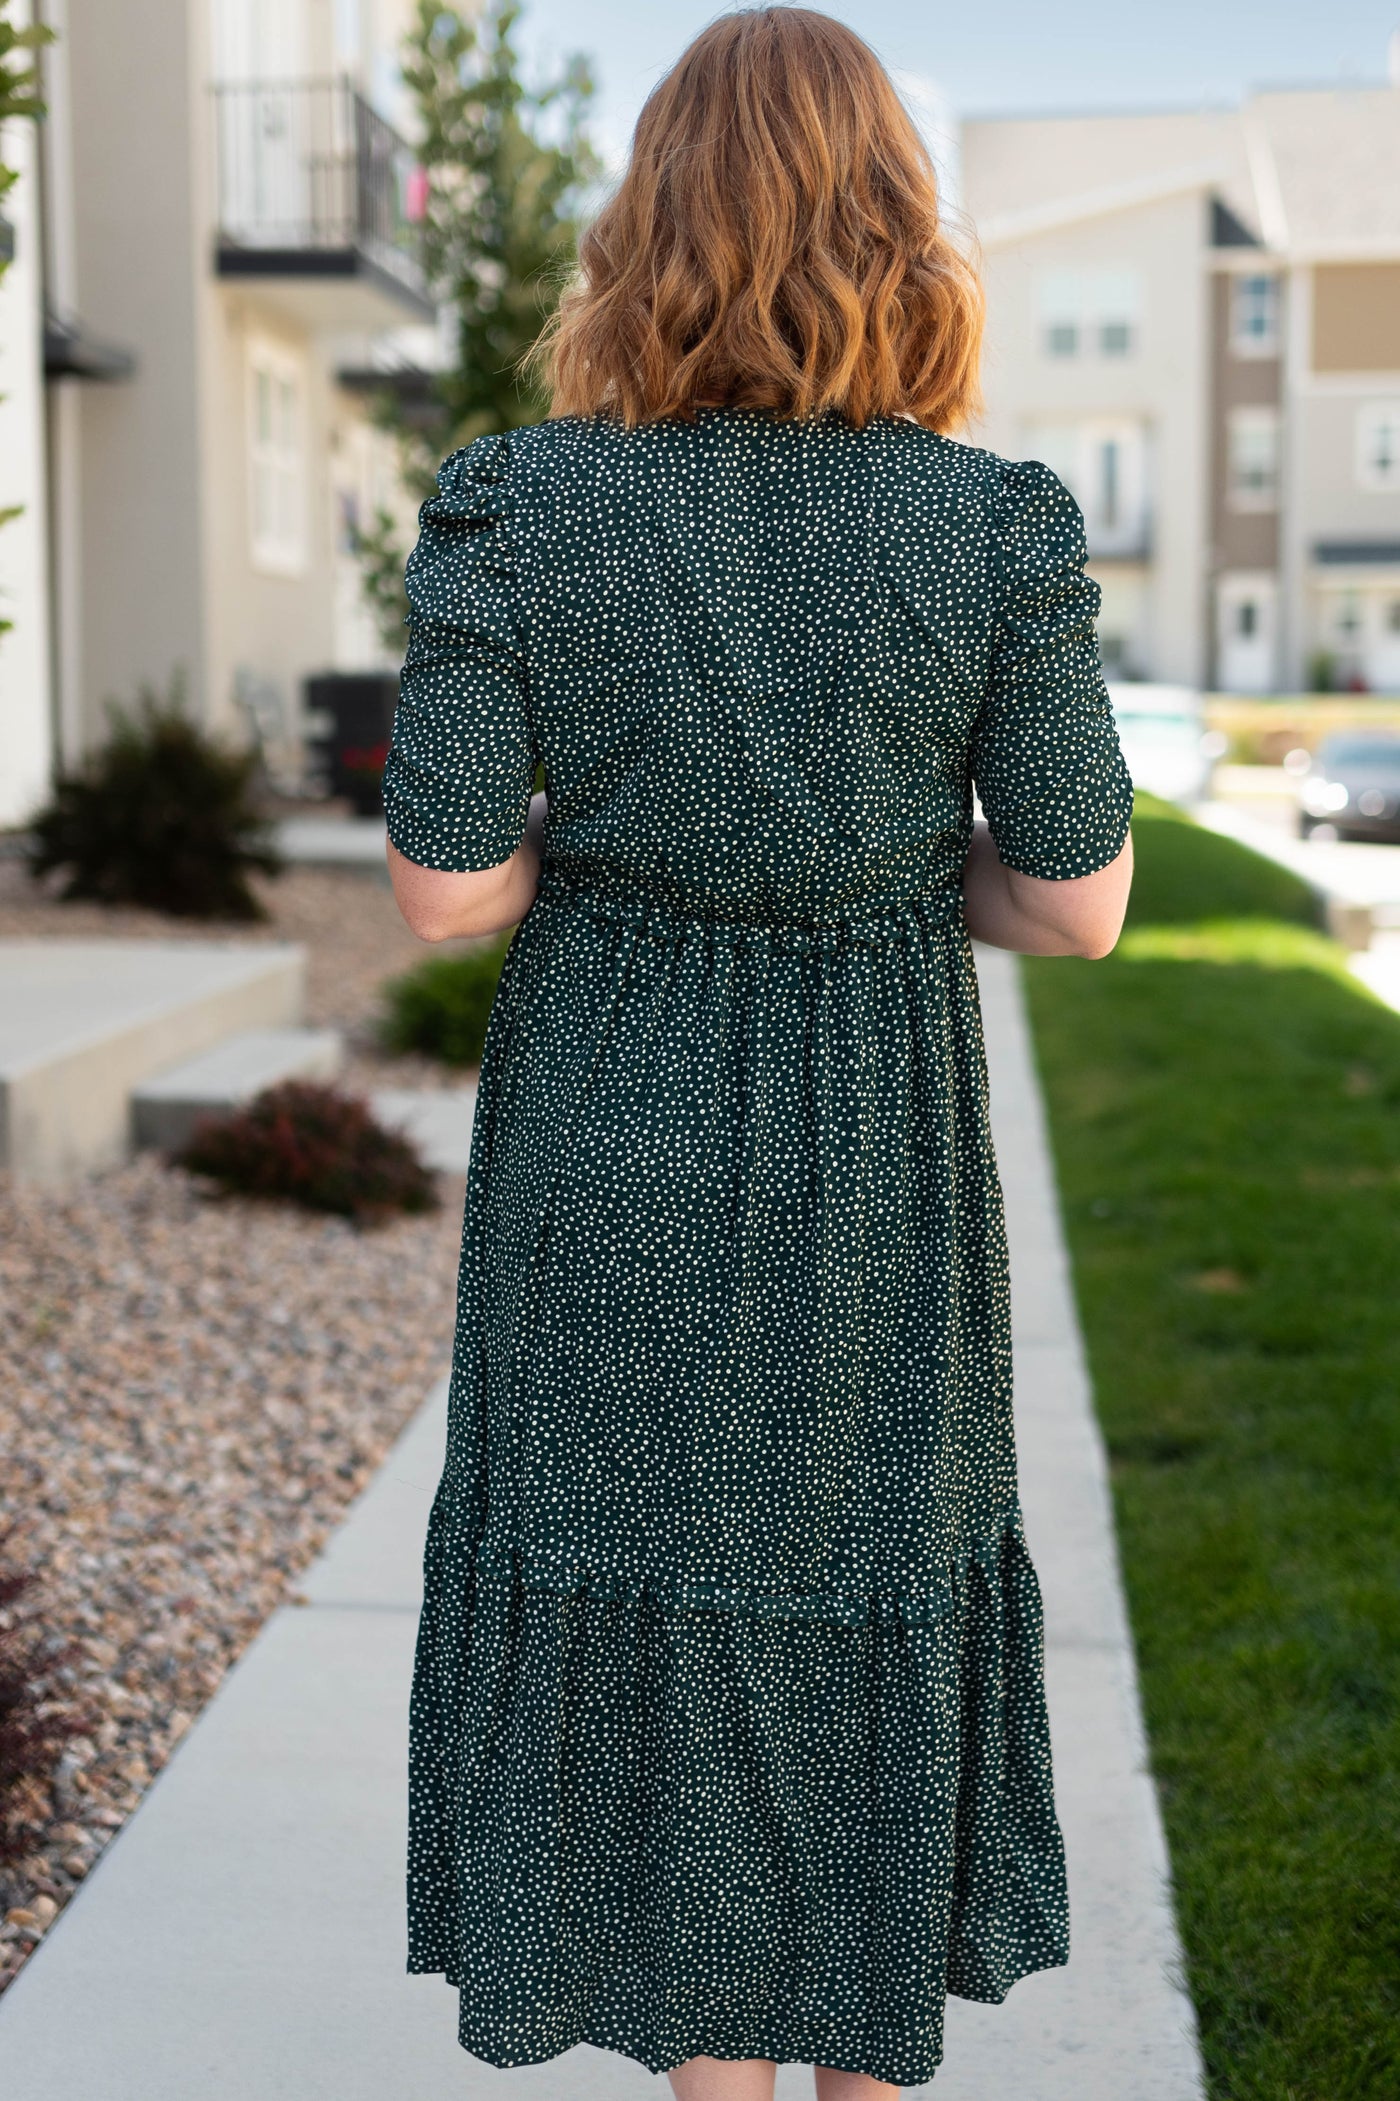 Back view of a hunter green dress